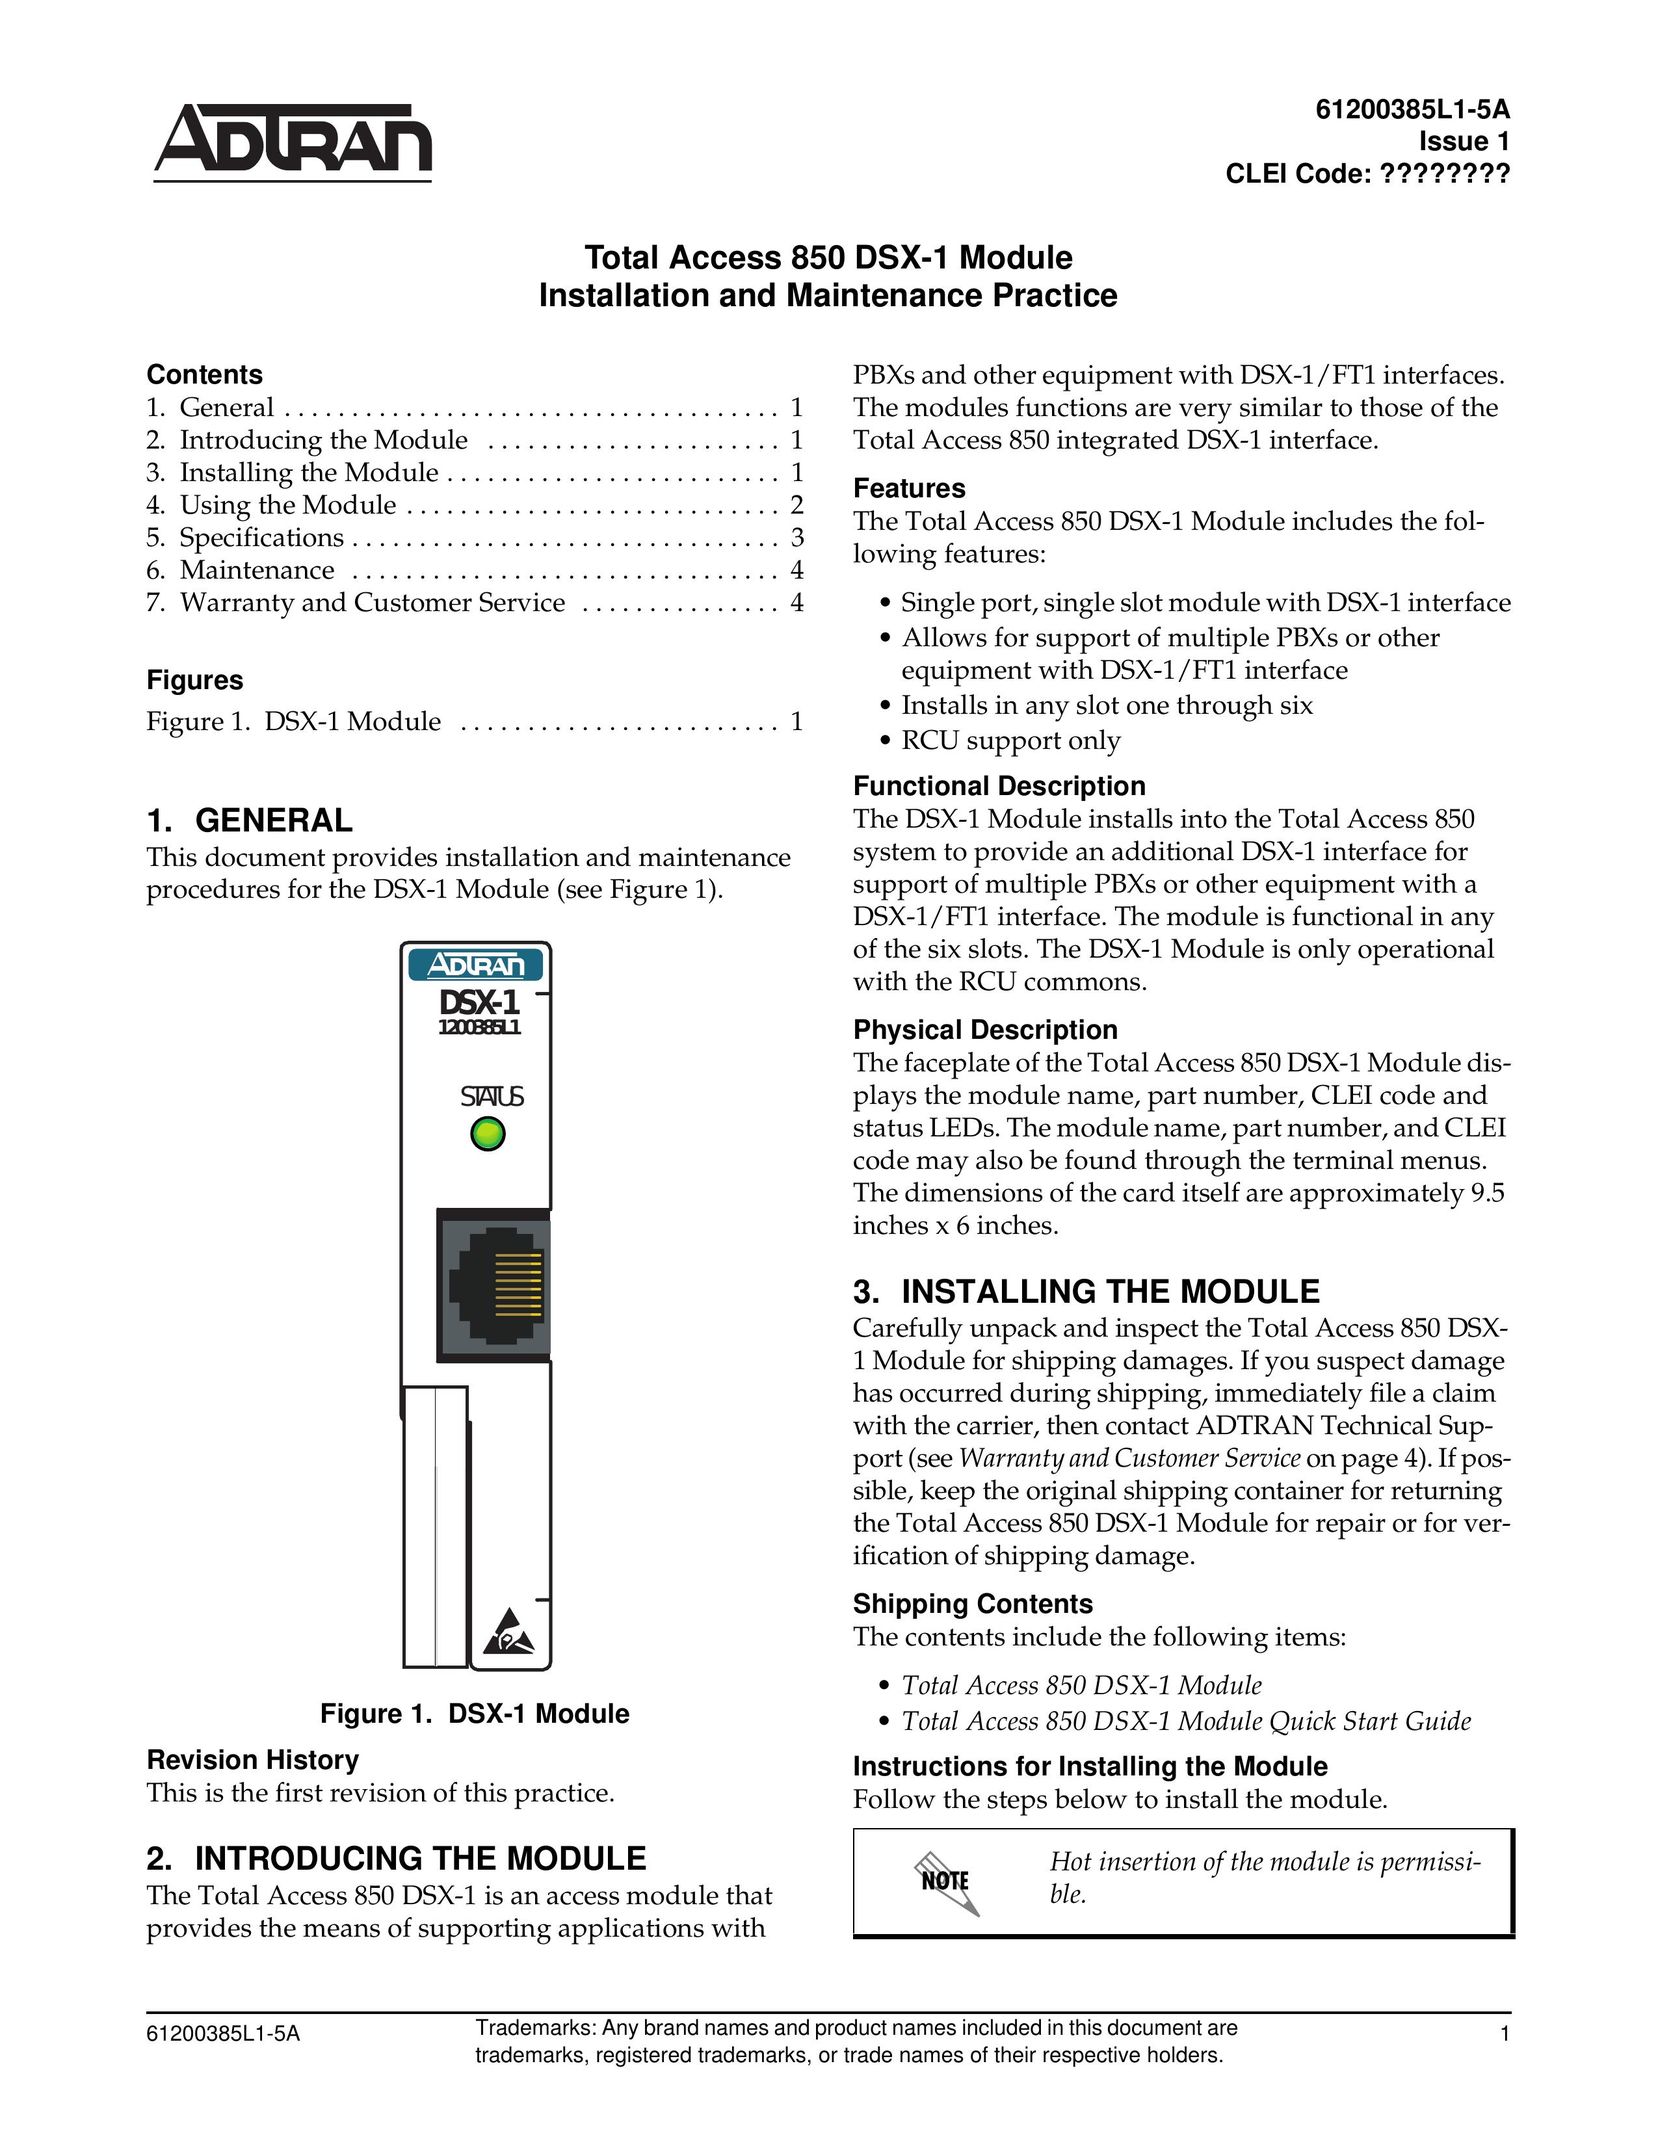 ADTRAN 1 Network Card User Manual